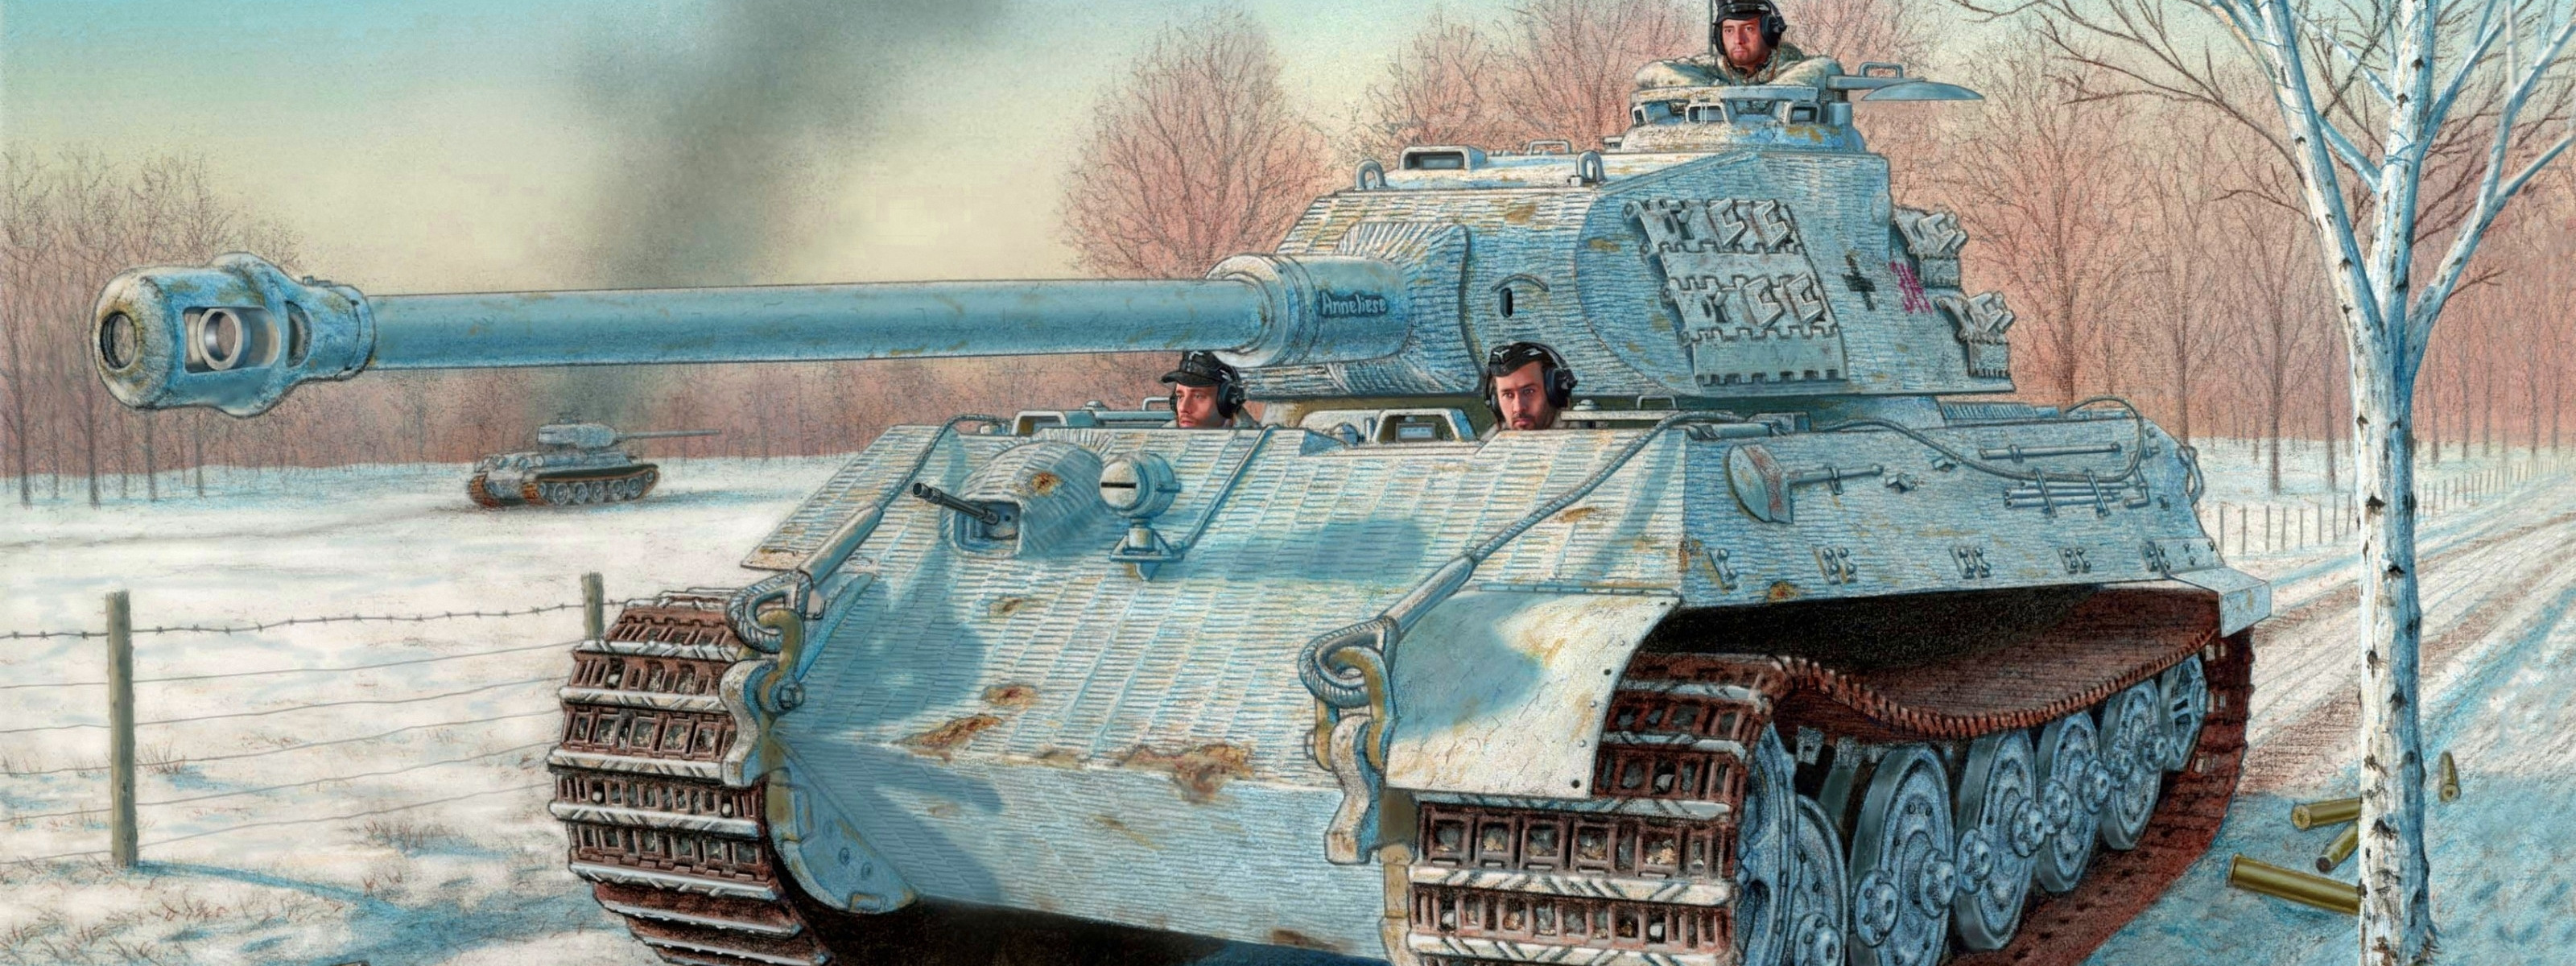 Год тигра немецкий танк. Тигр 2 Порше. Королевский тигр и т34. Немецкий танк тигр 2. Танк ИС-2 И Королевский тигр.